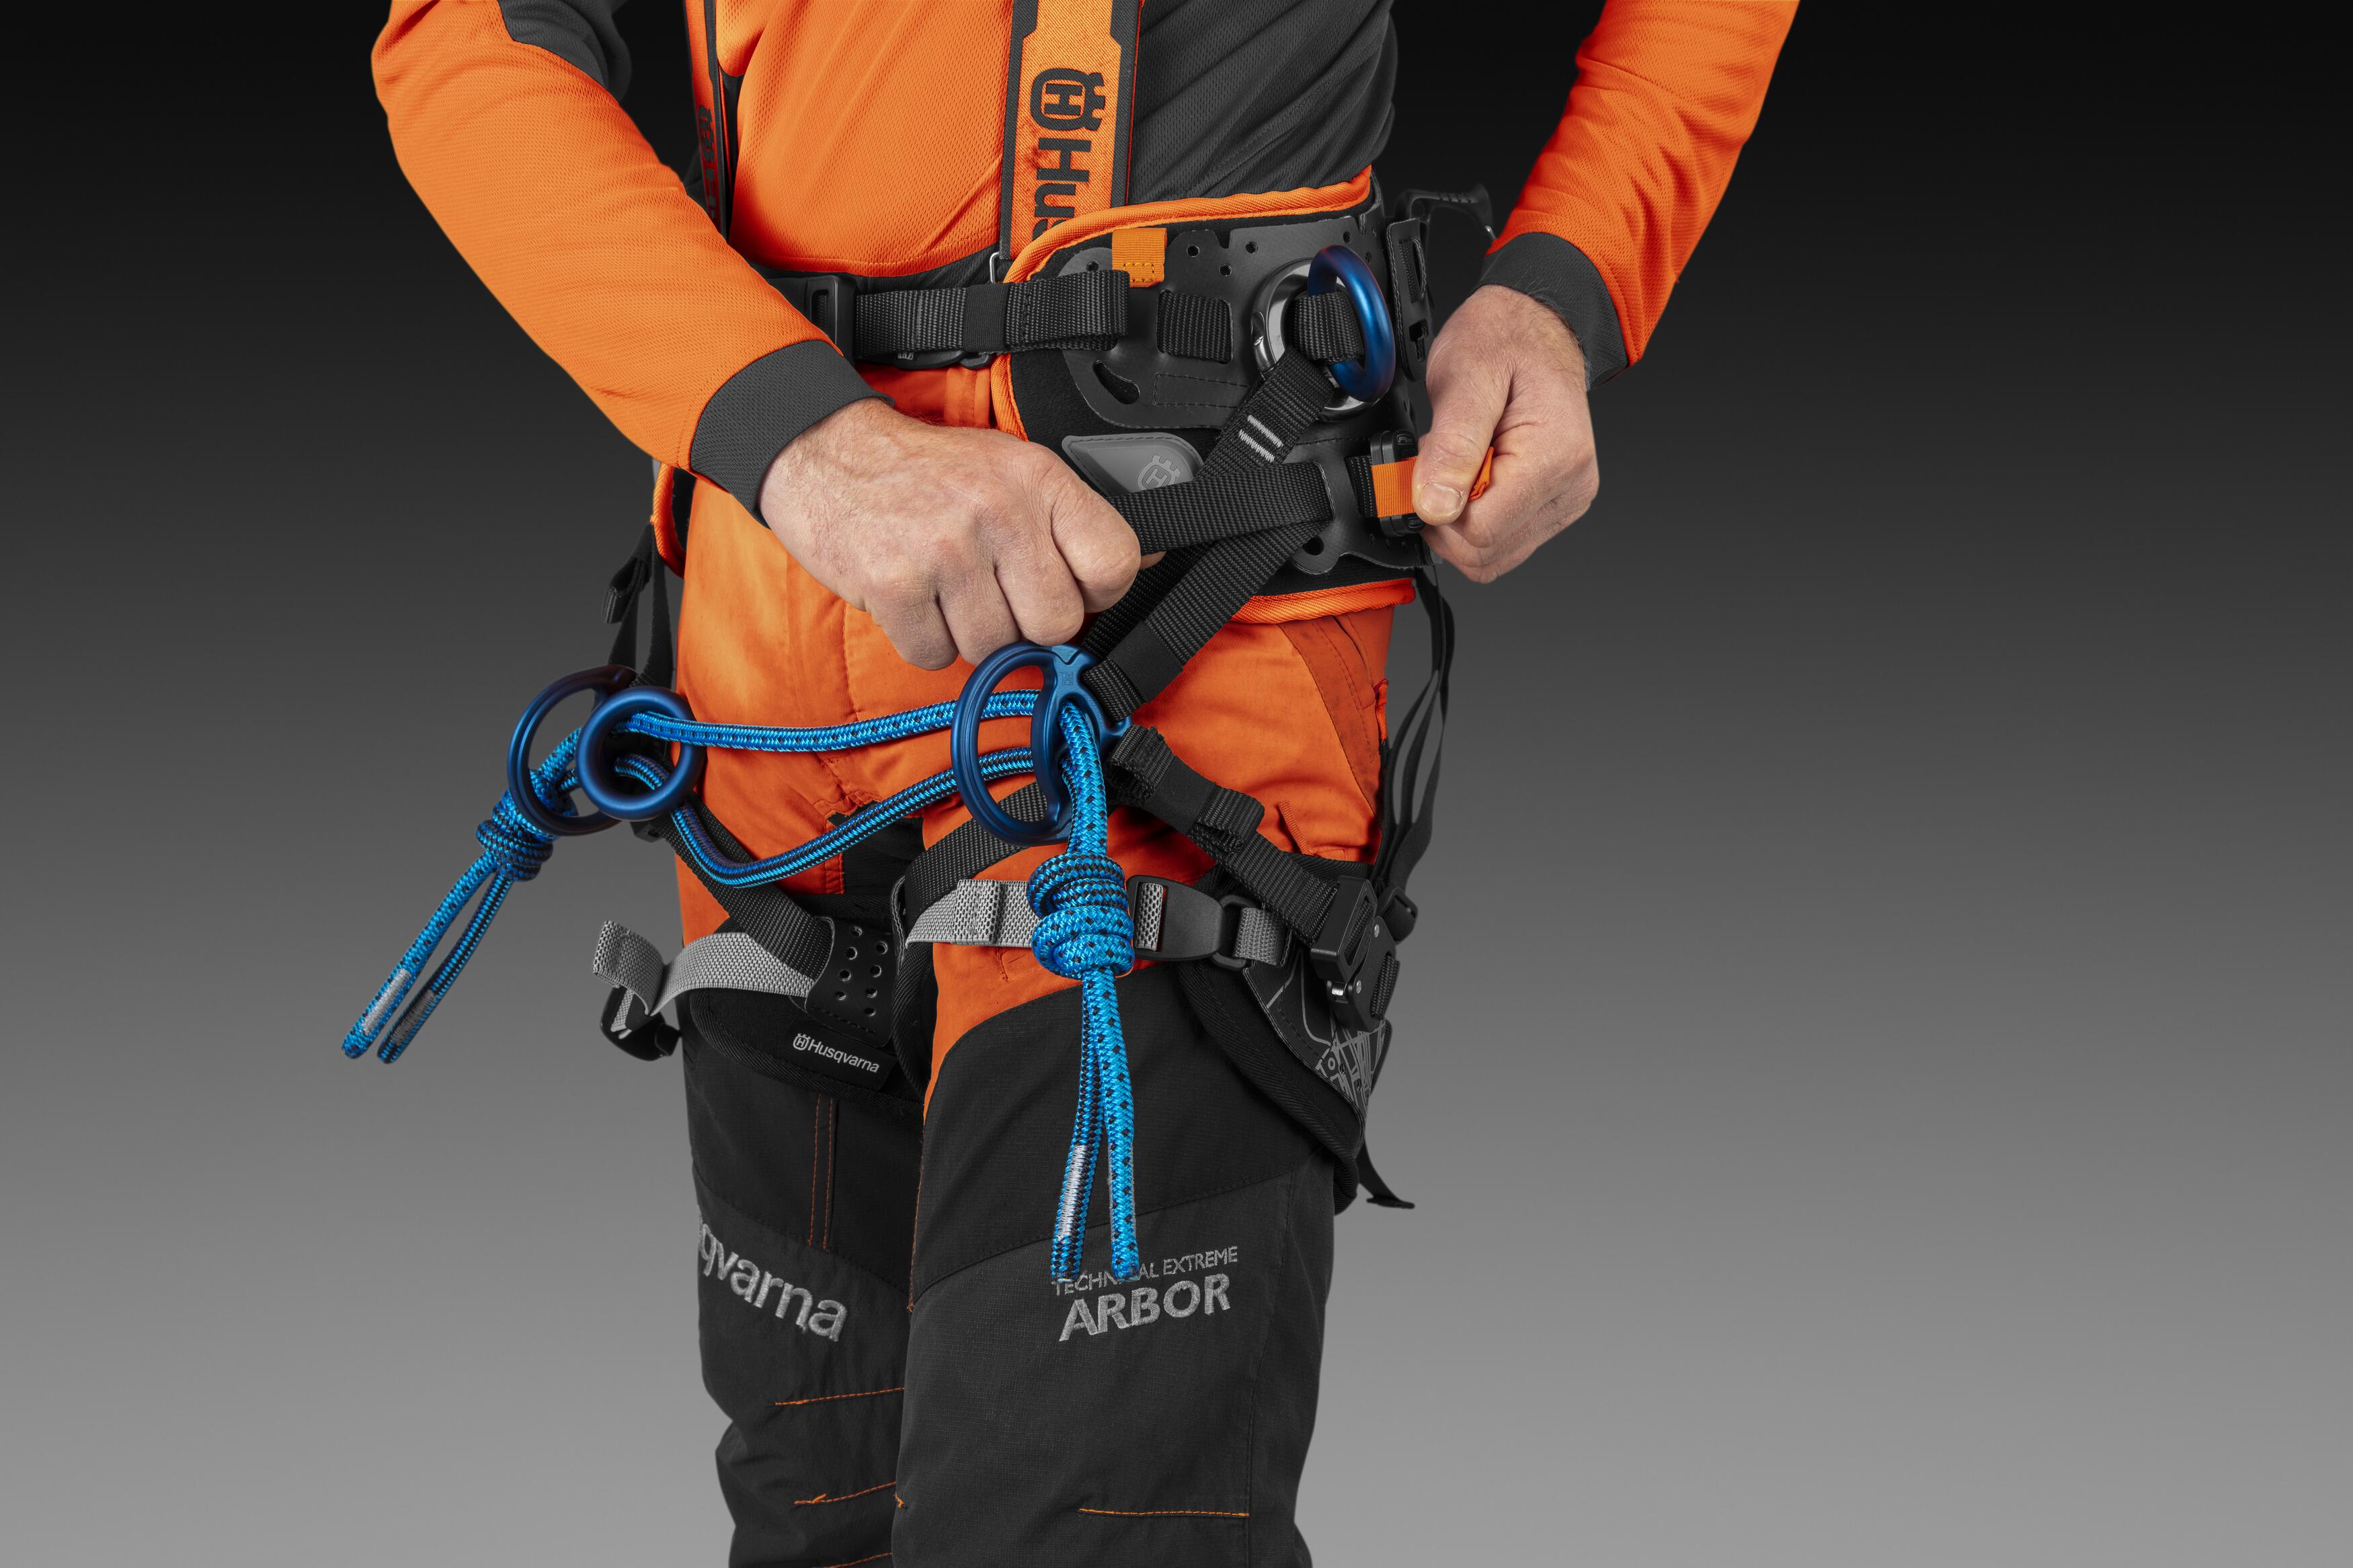 Climbing harness, Adjustable leg loops